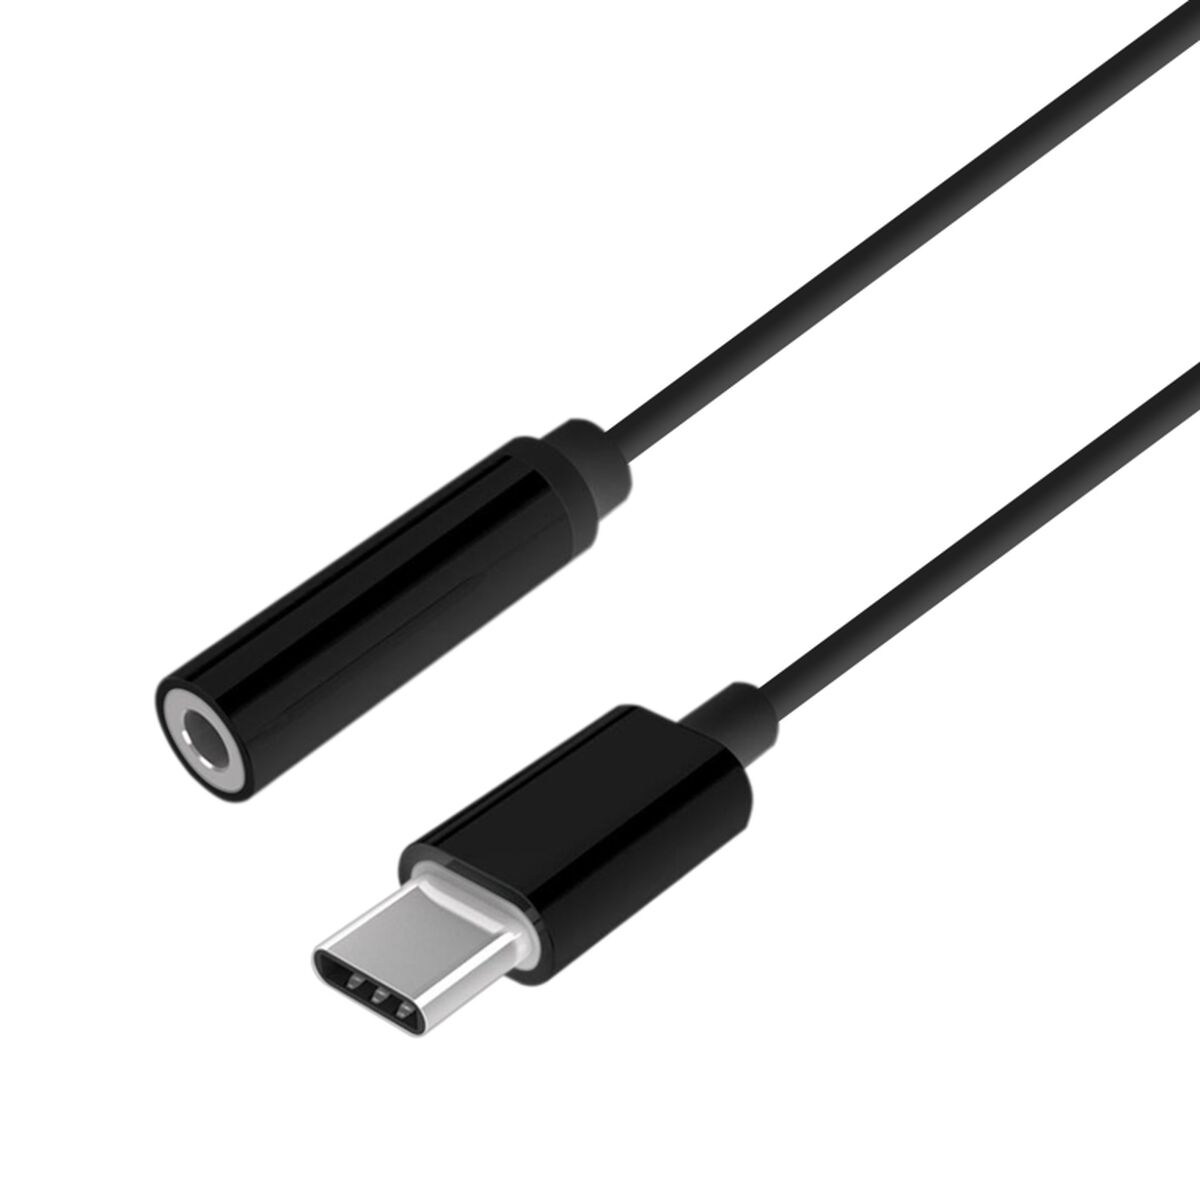 Adaptor USB Aisens Conversor USB-C a audio estilo Apple, USB-C/M-Jack 3.5/H, Negro, 15 cm